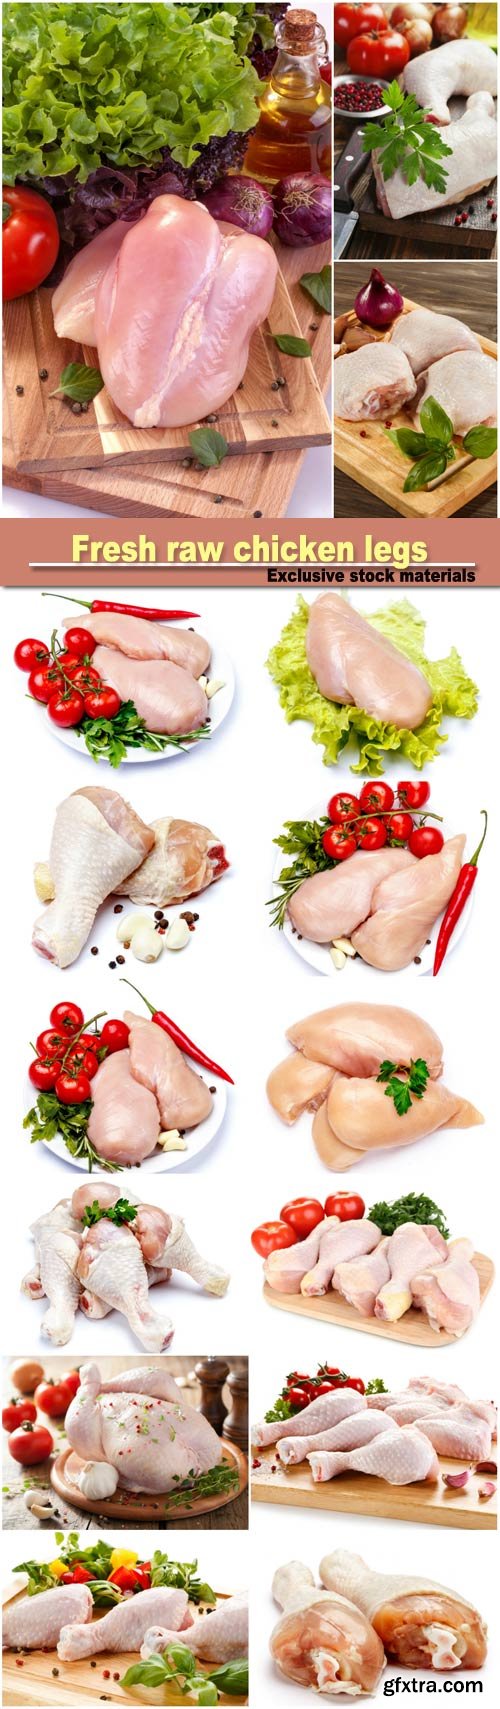 Raw chicken breast fillets, fresh raw chicken legs on the cutting board